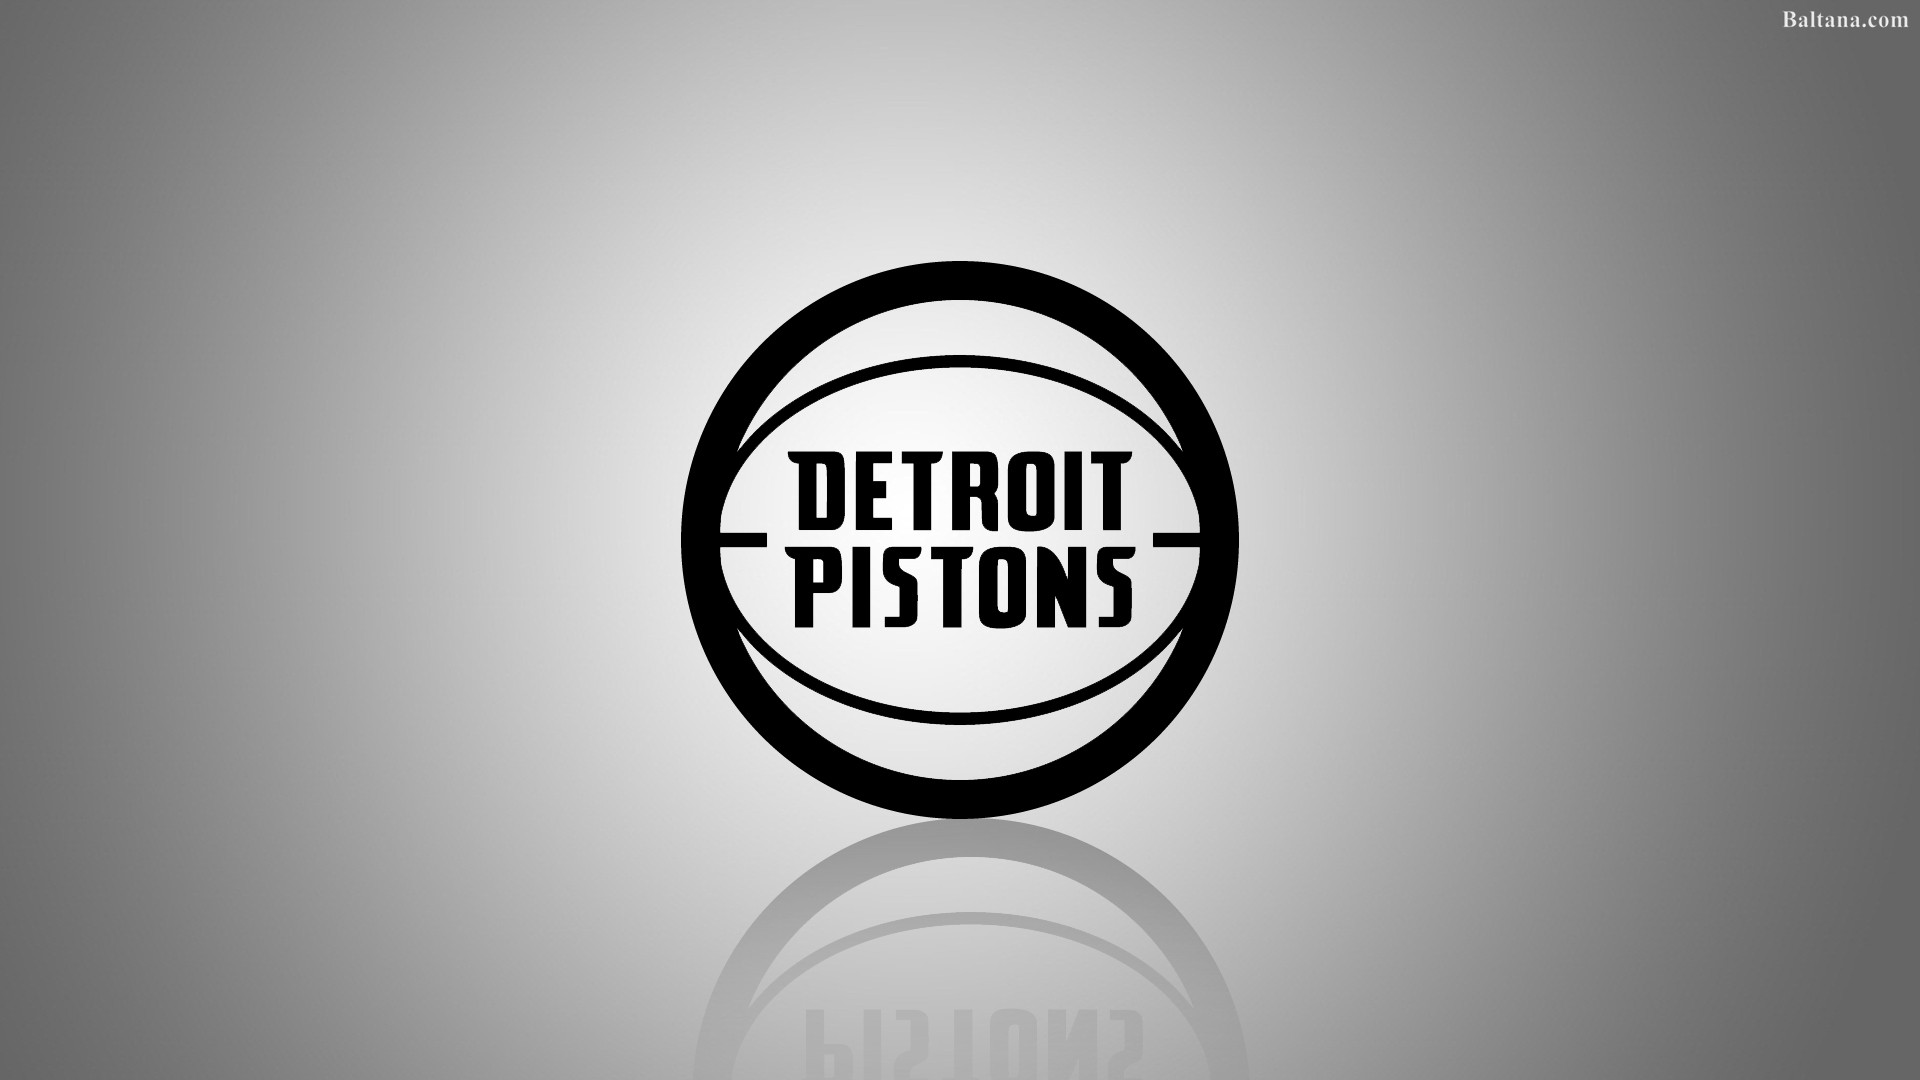 Detroit Pistons Wallpaper Baltana